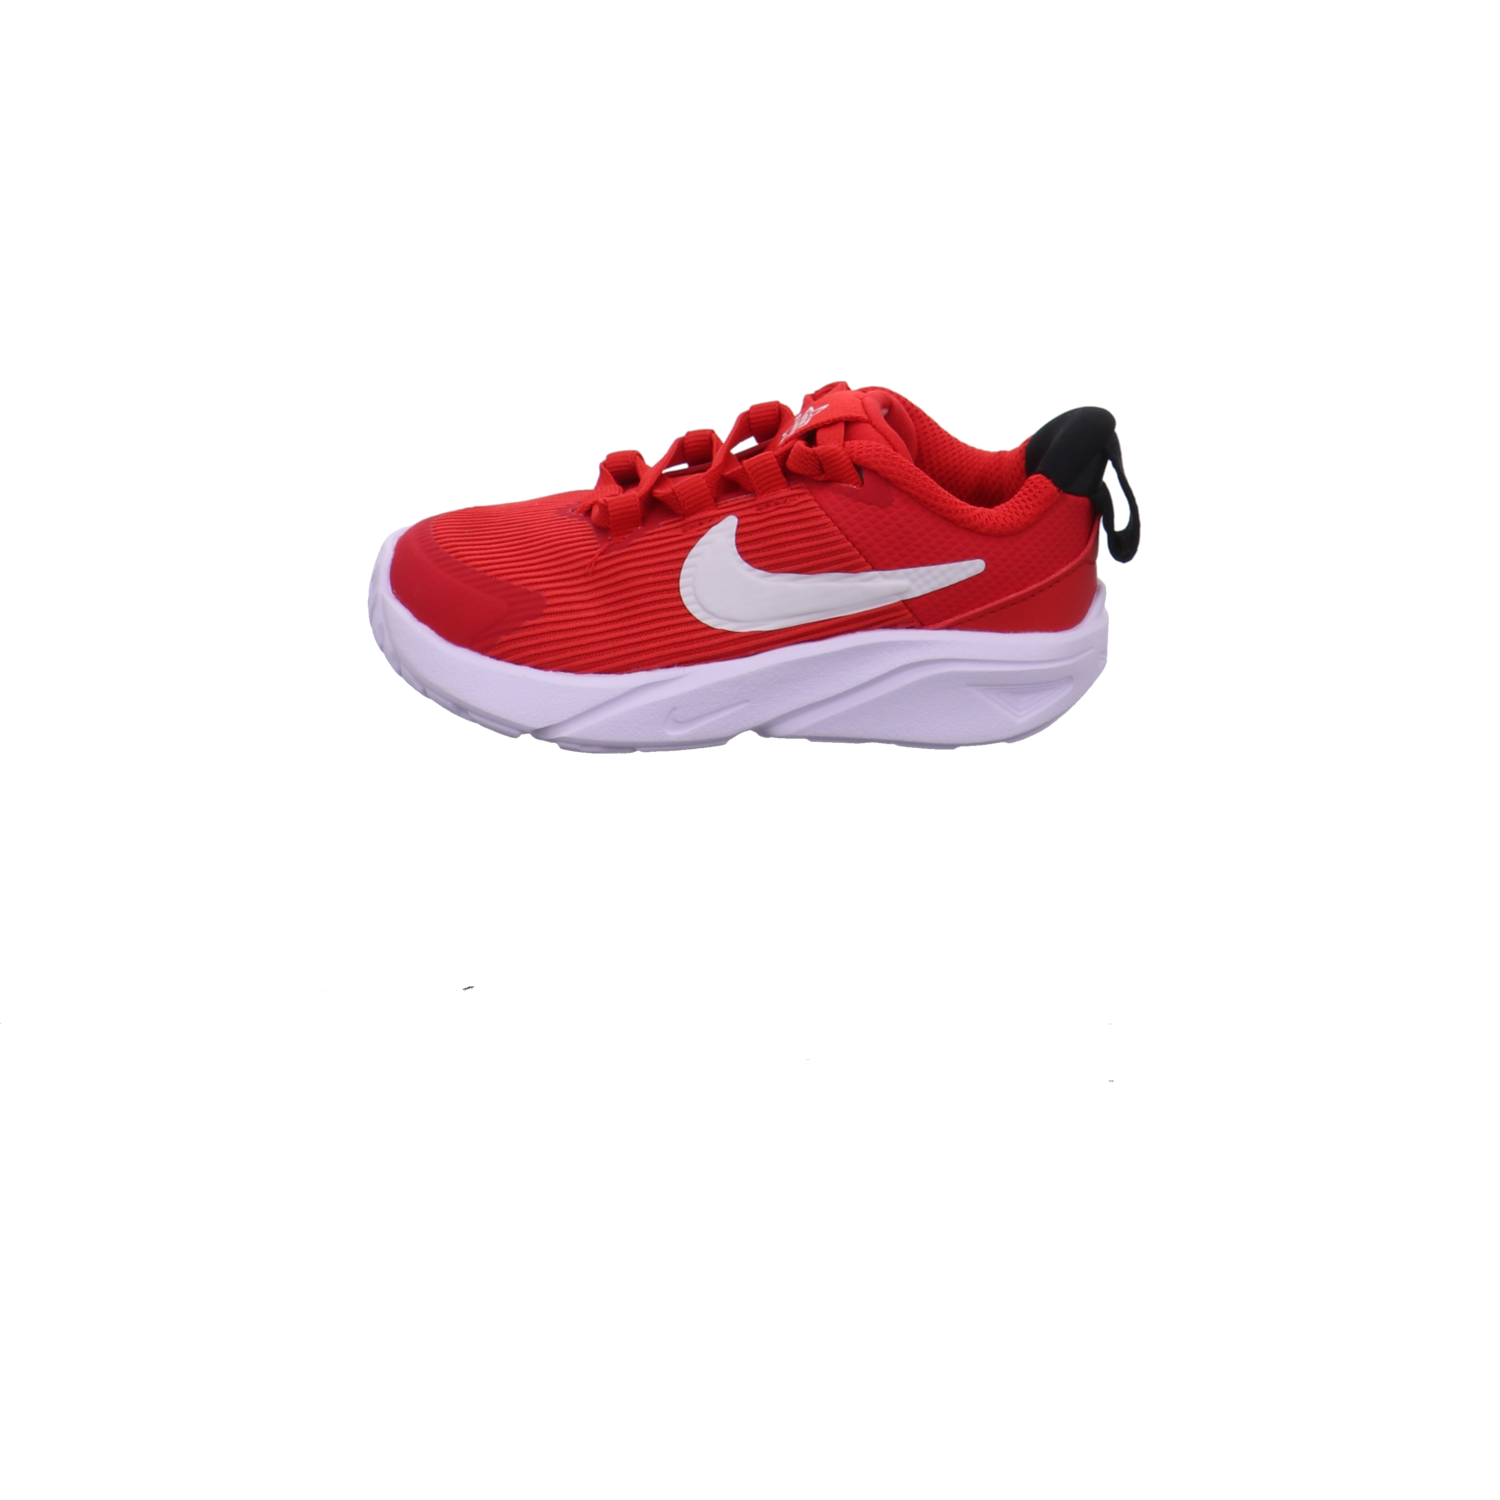 Nike Krabbel- und Lauflernschuhe rot kombi Bild1